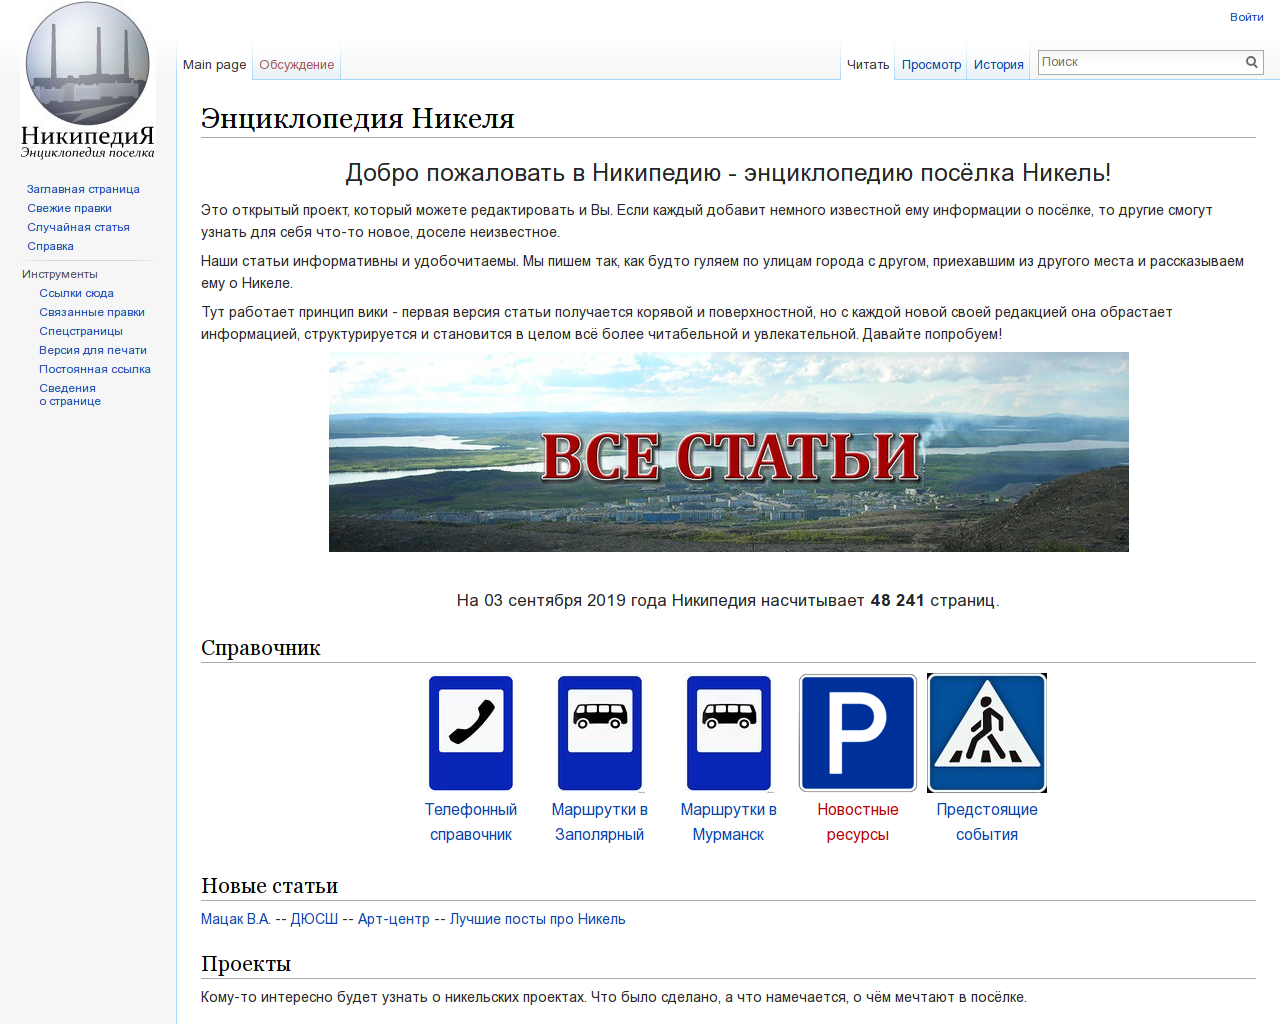 Изображение сайта nikipedia.ru в разрешении 1280x1024